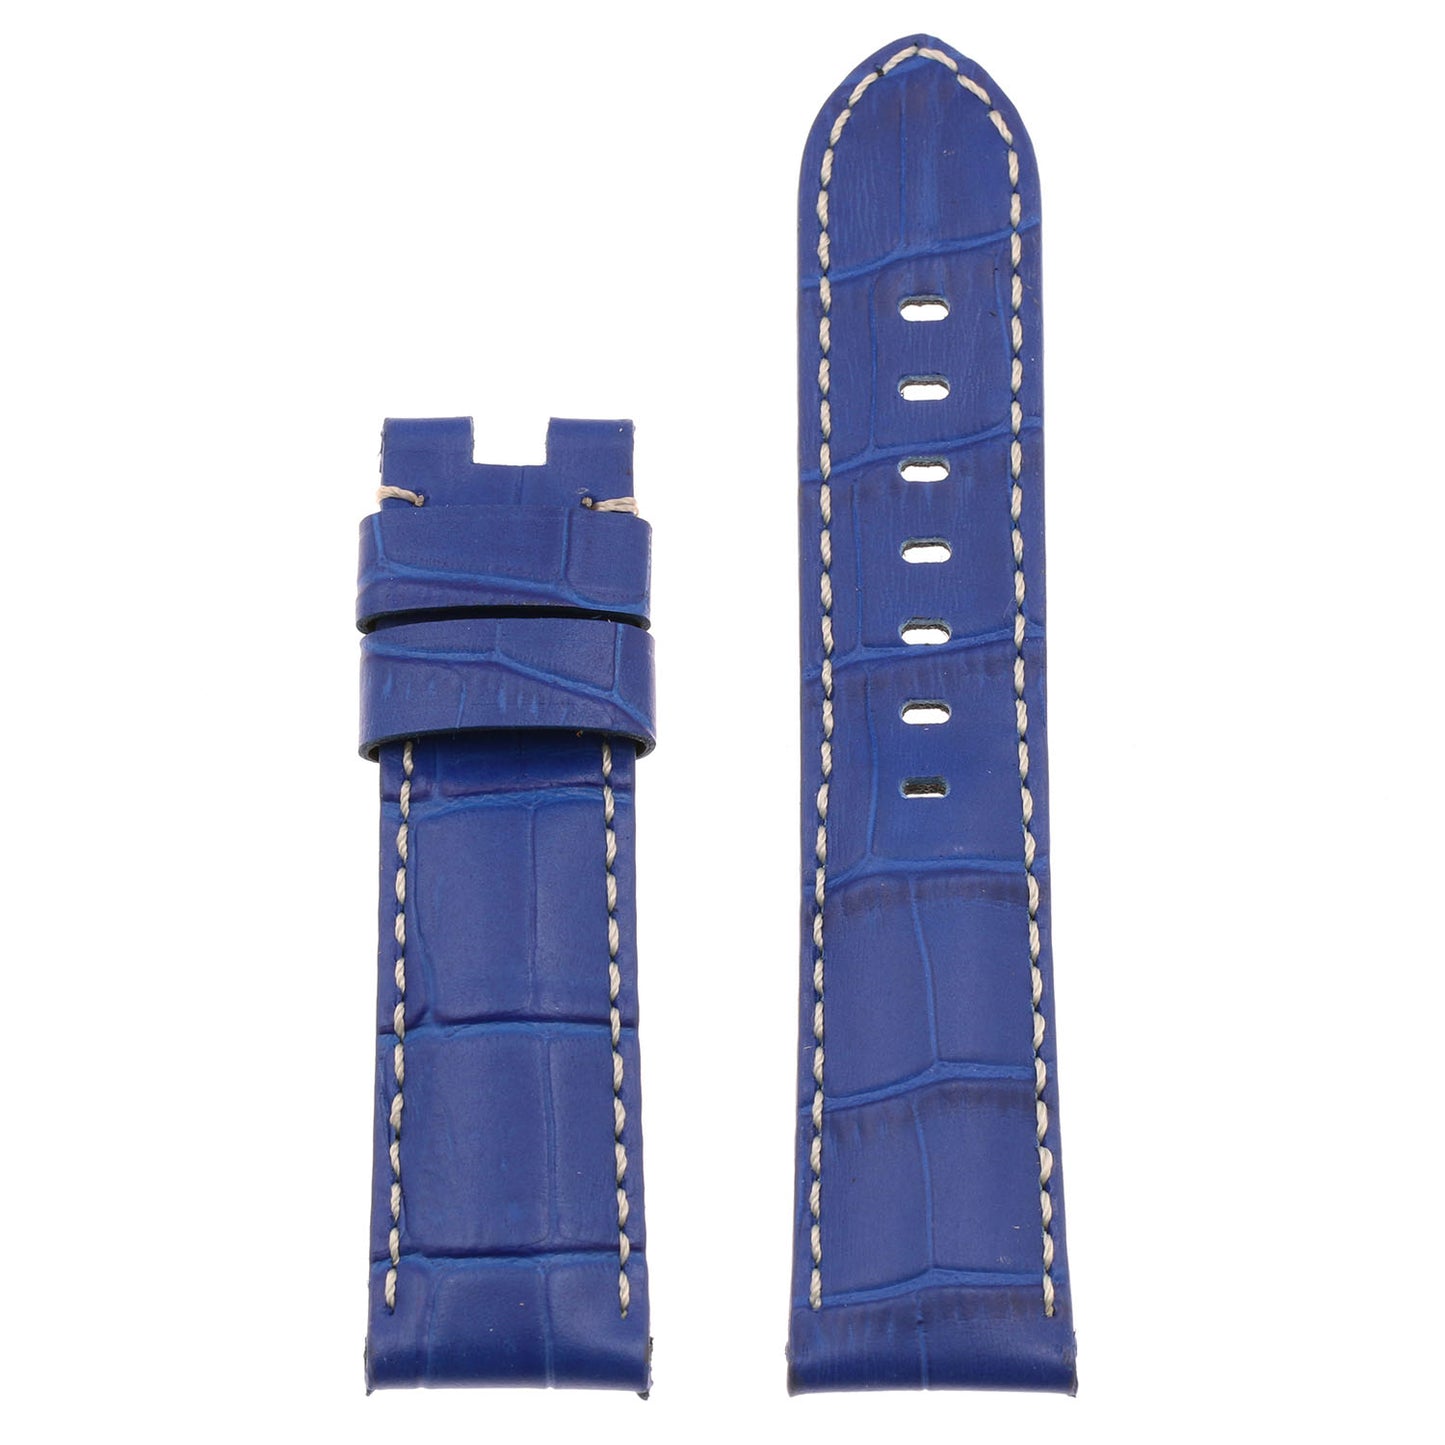 DASSARI Croc Leather Strap for Deployant Clasp Blue